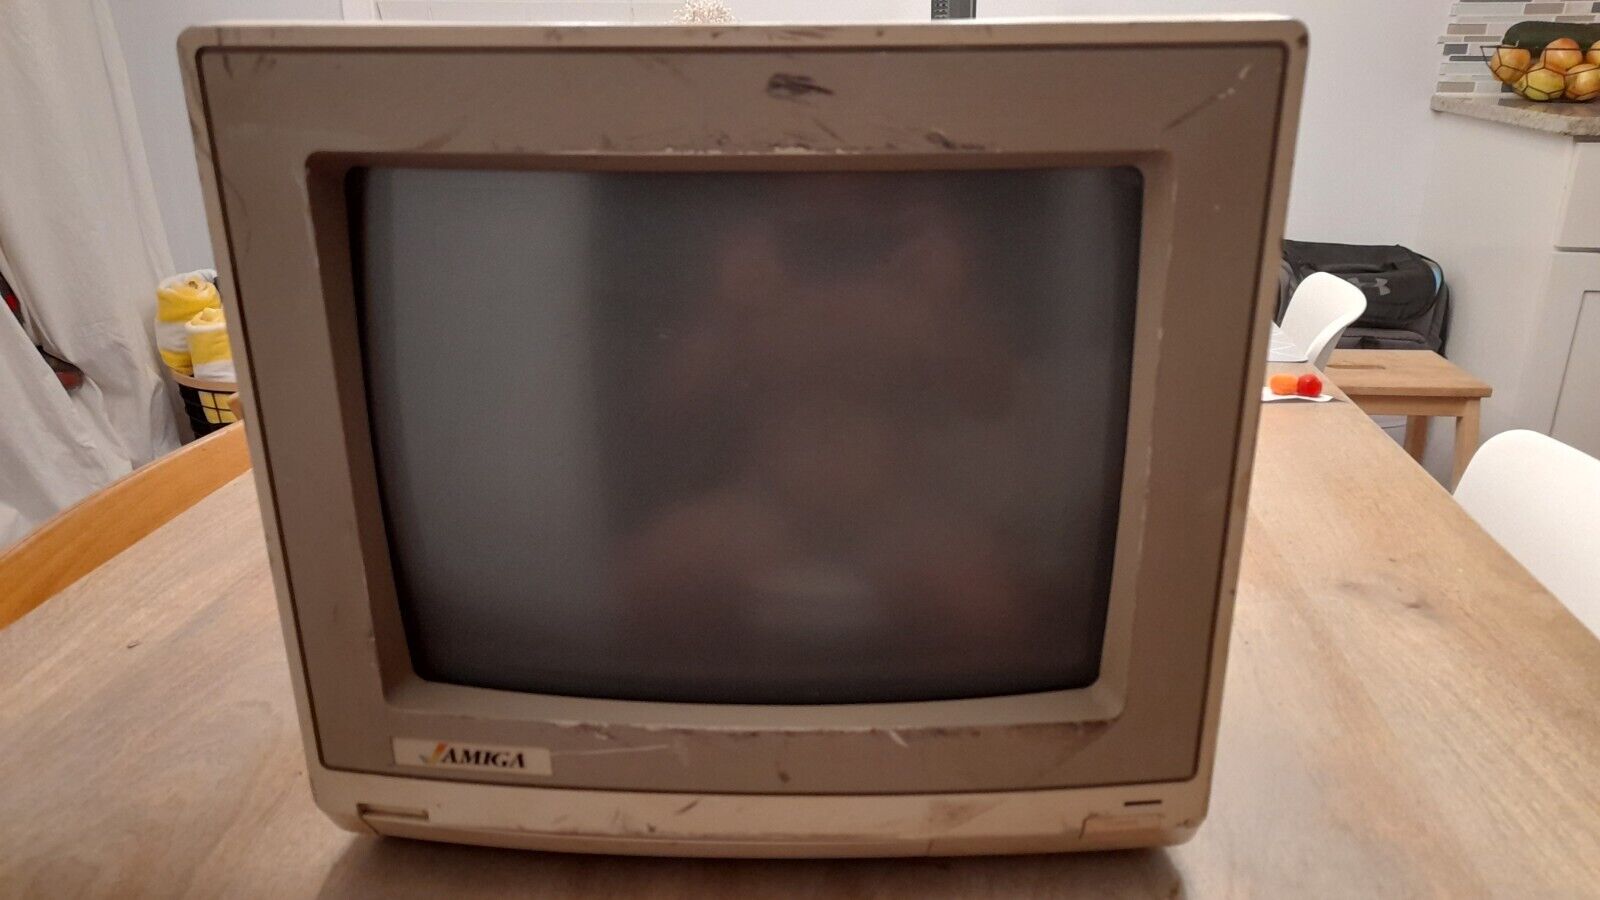 Early Commodore Amiga 1080 NTSC Monitor - still in working condition